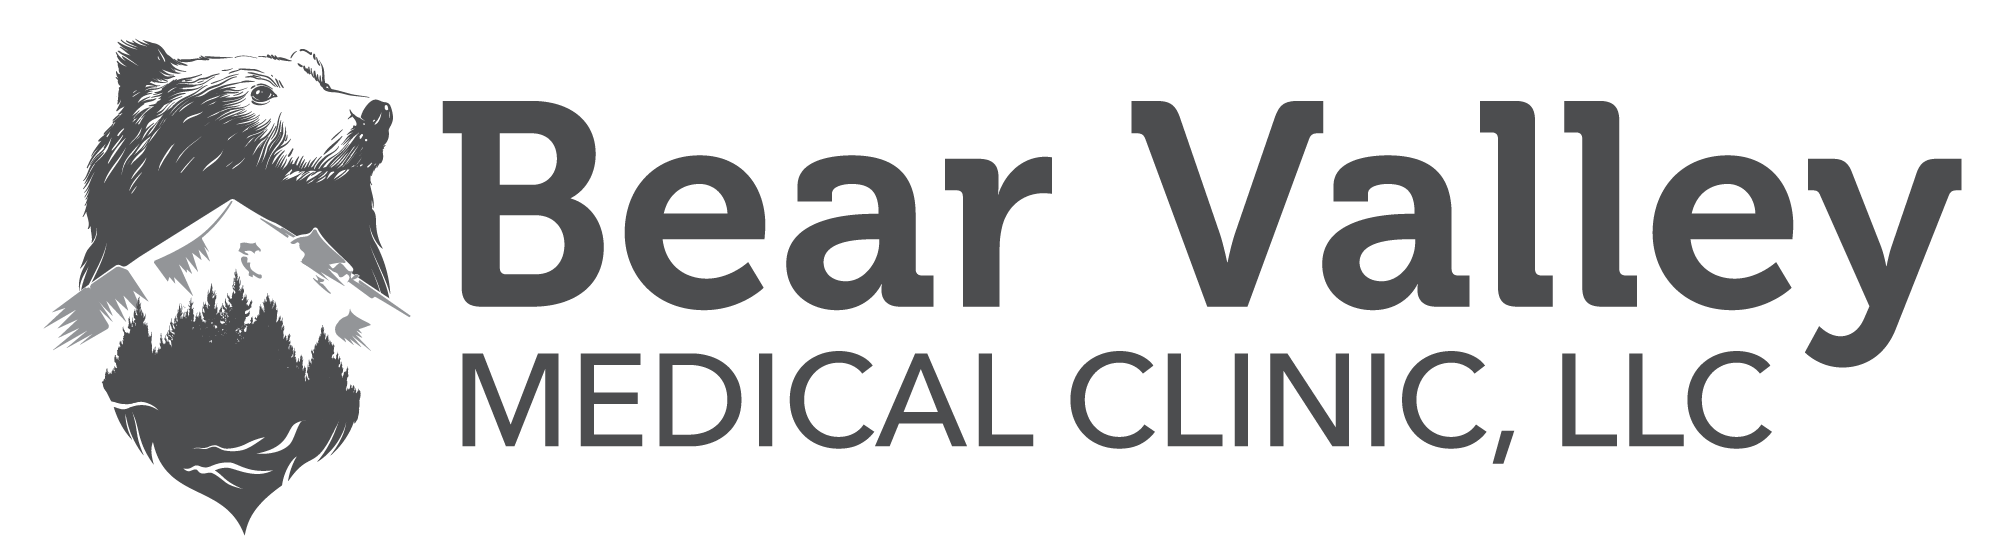 Bear Valley Medical Clinic